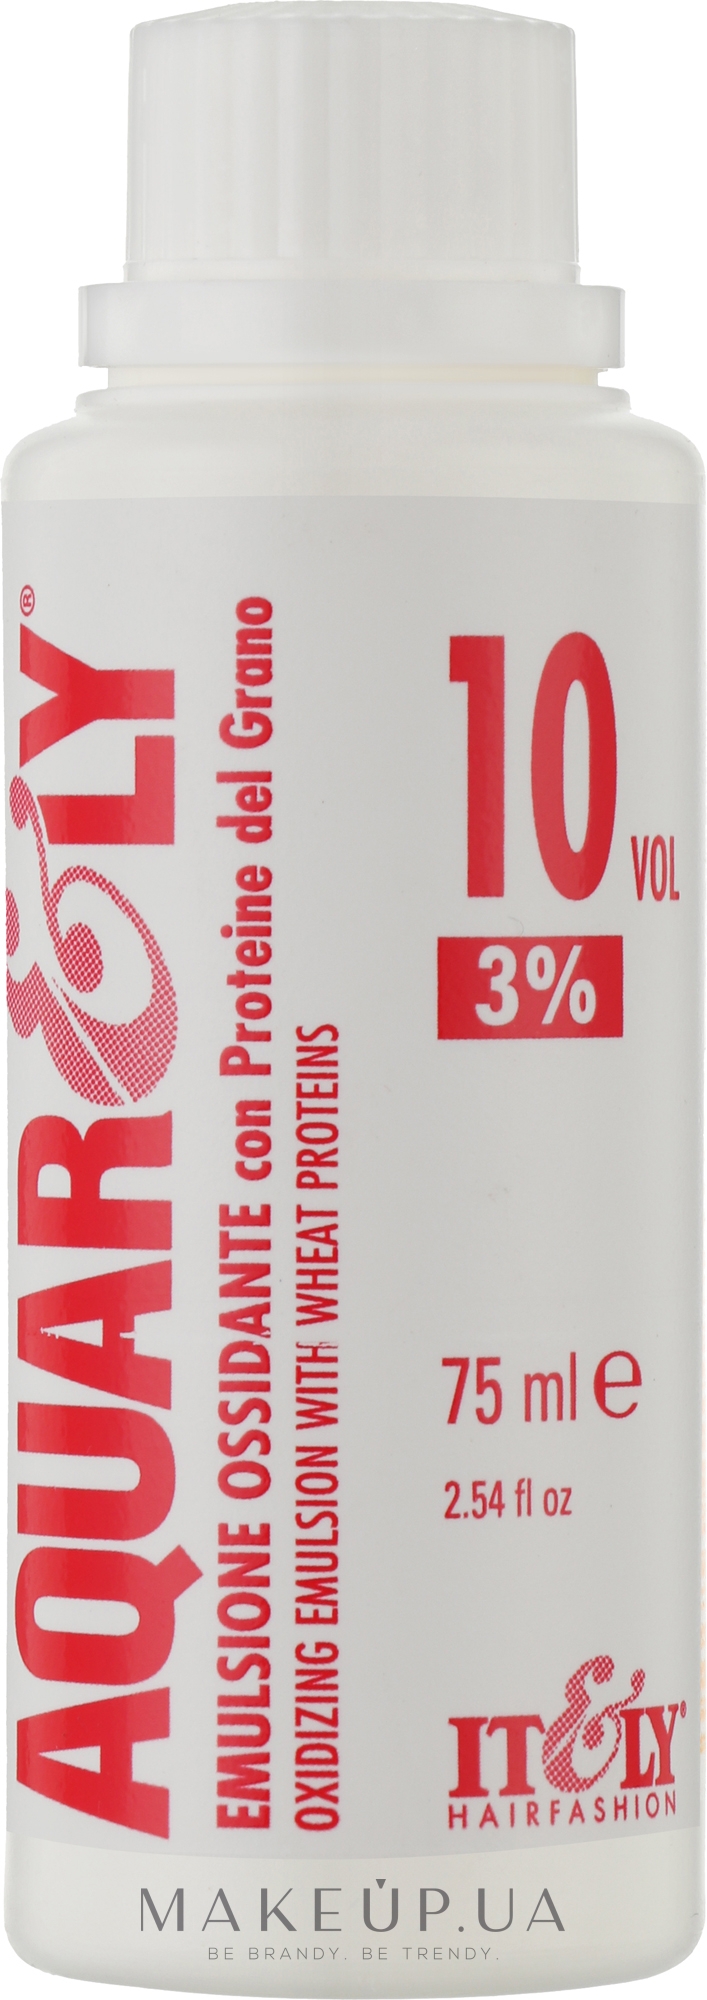 Окислительная эмульсия 3% - Itely Hairfashion Aquarely Oxidizing Emulsion — фото 75ml